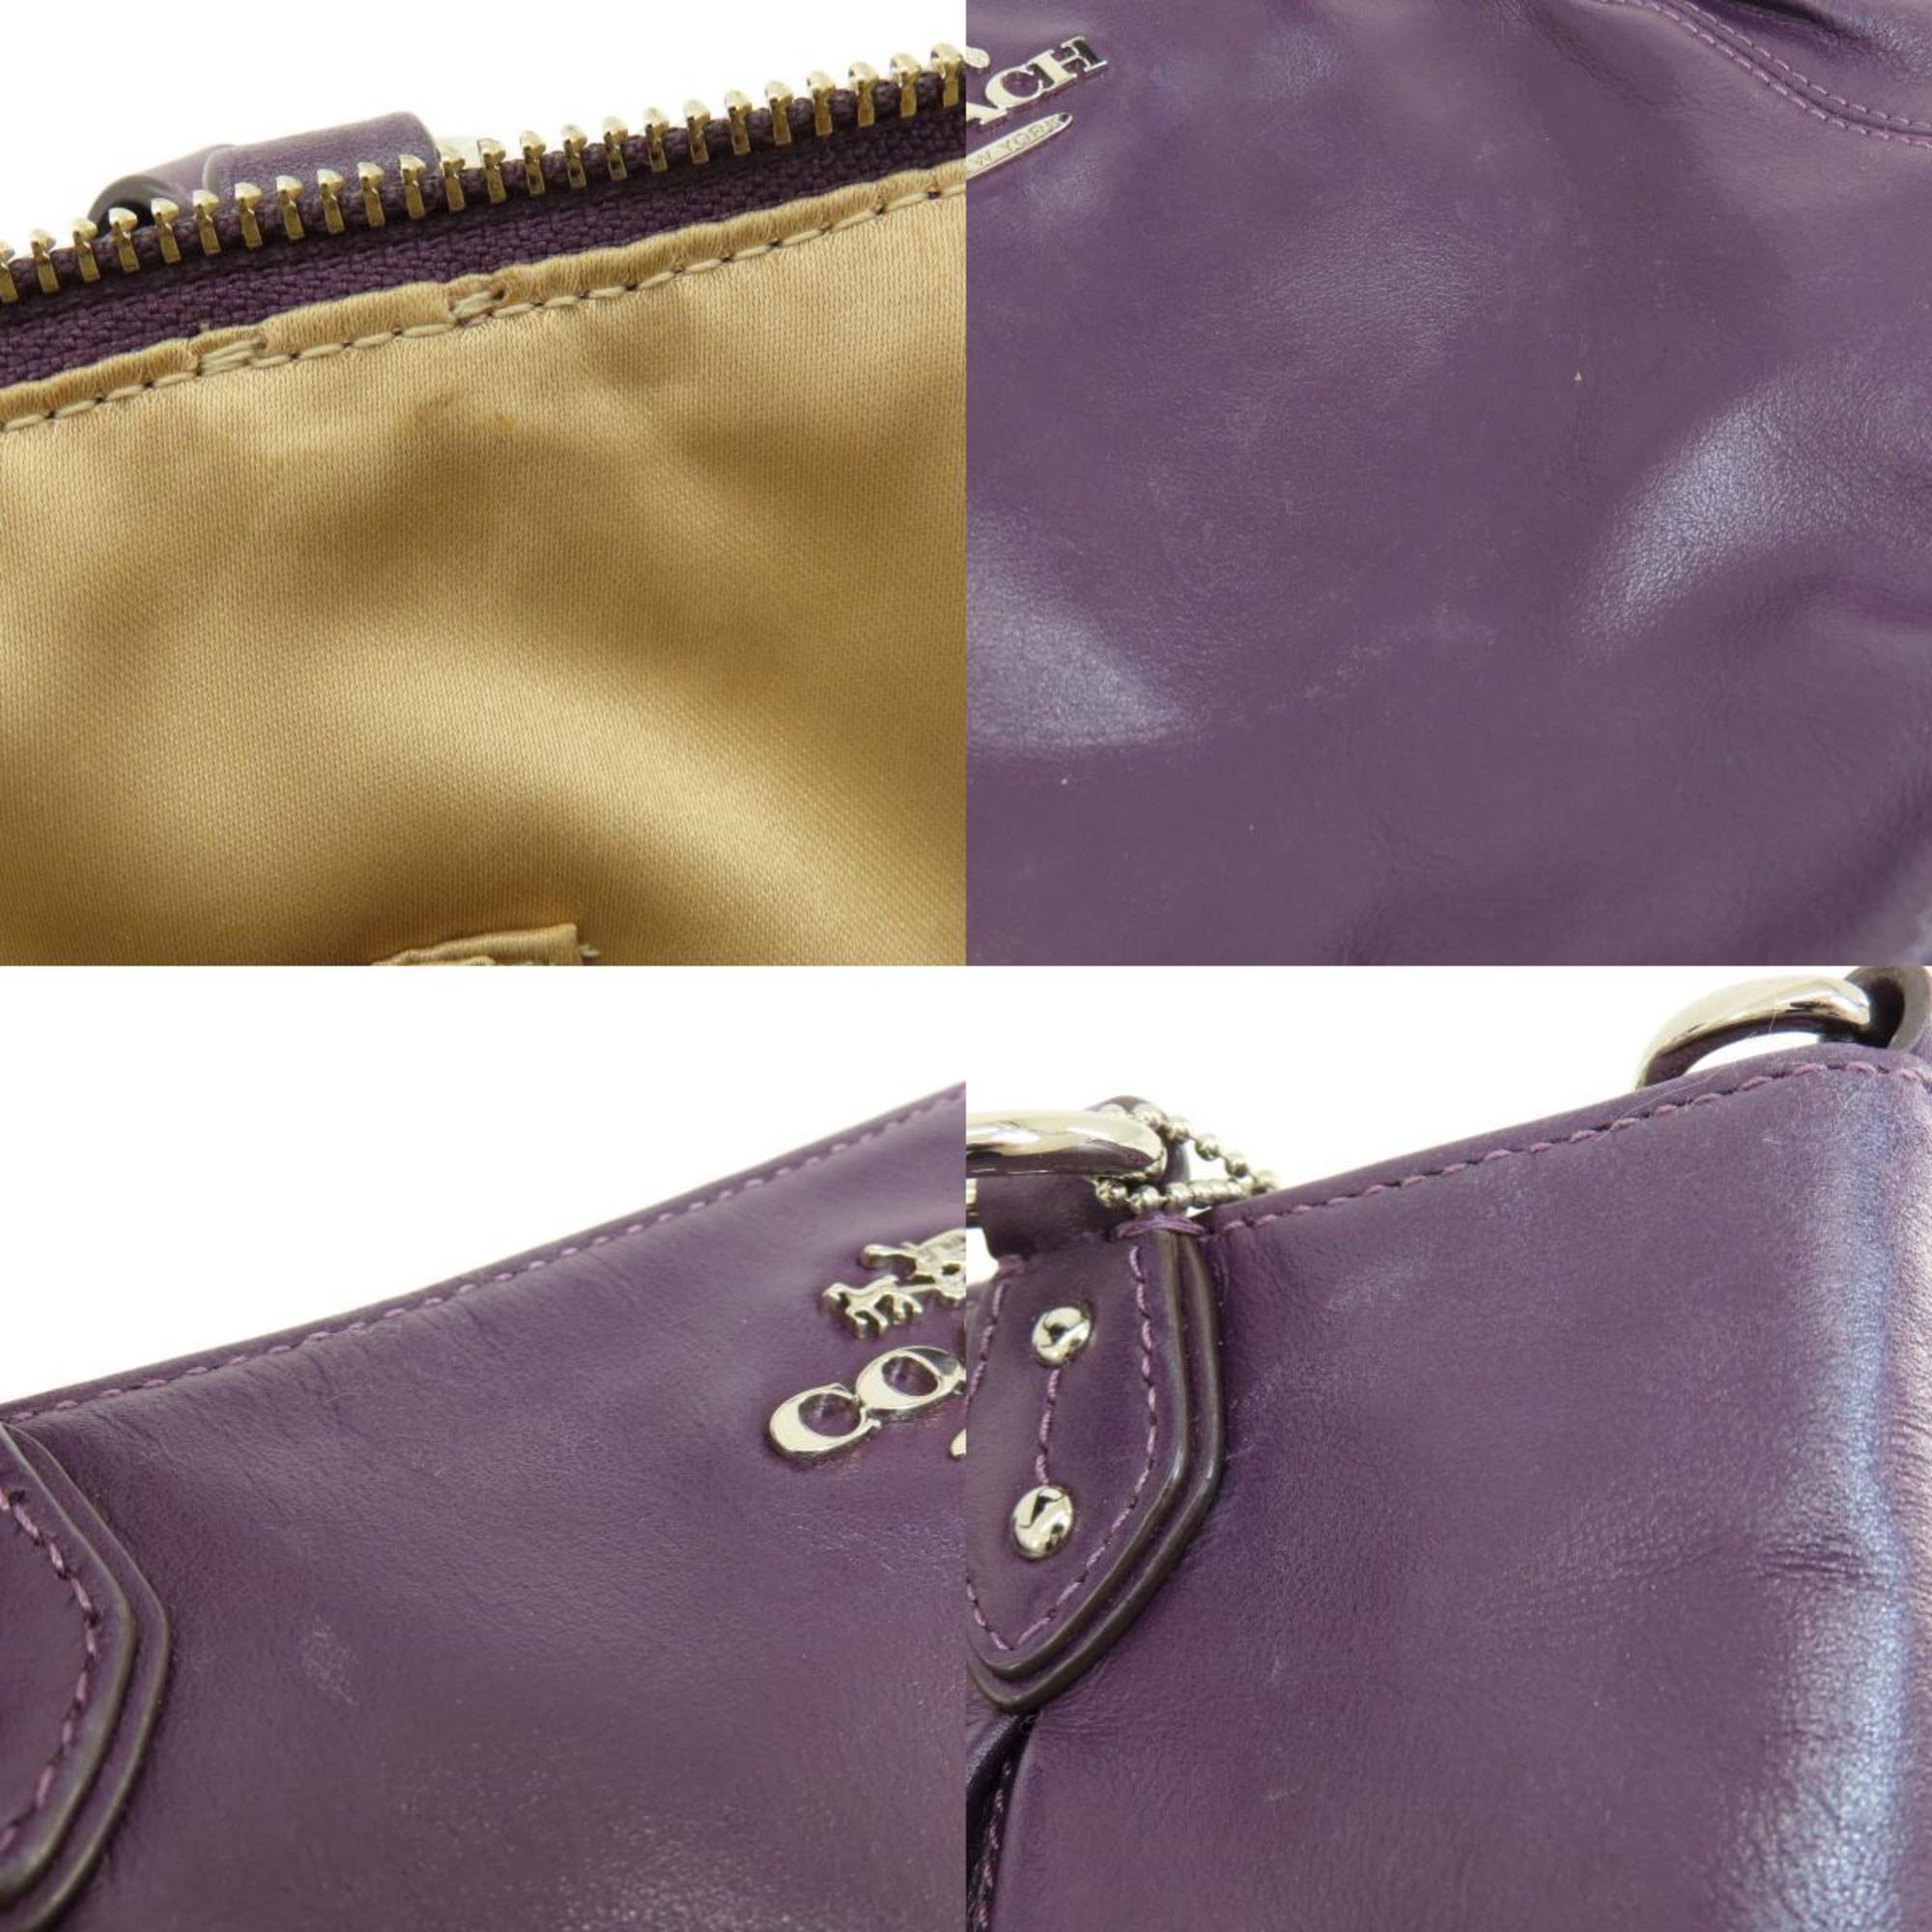 Coach F32947 handbag leather ladies